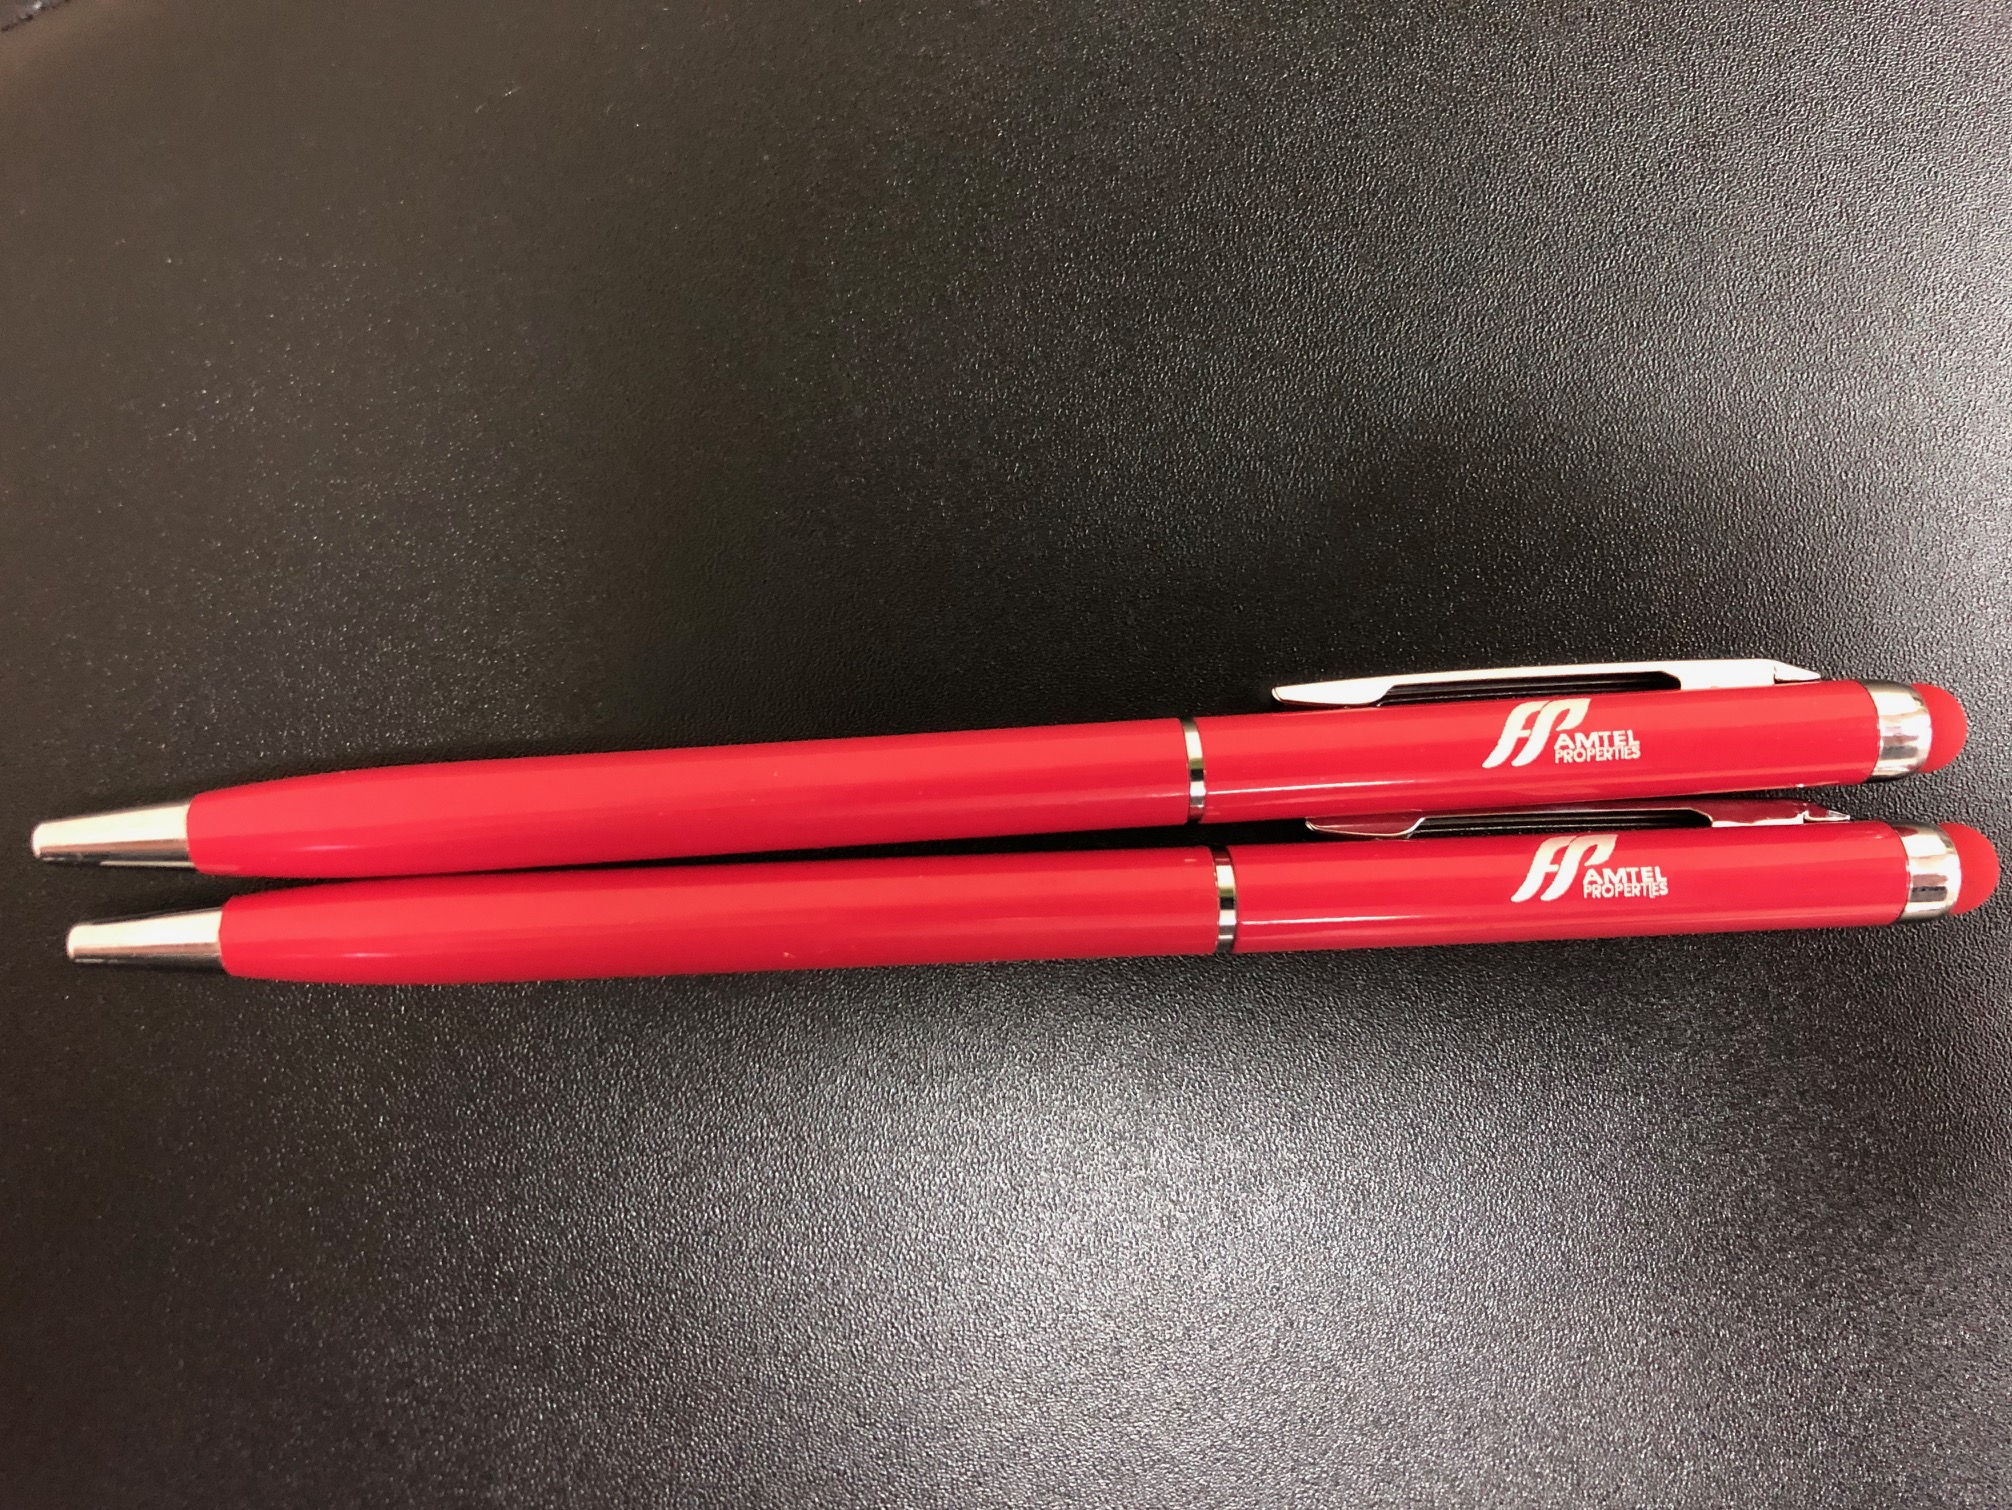 Stylus pens with logo